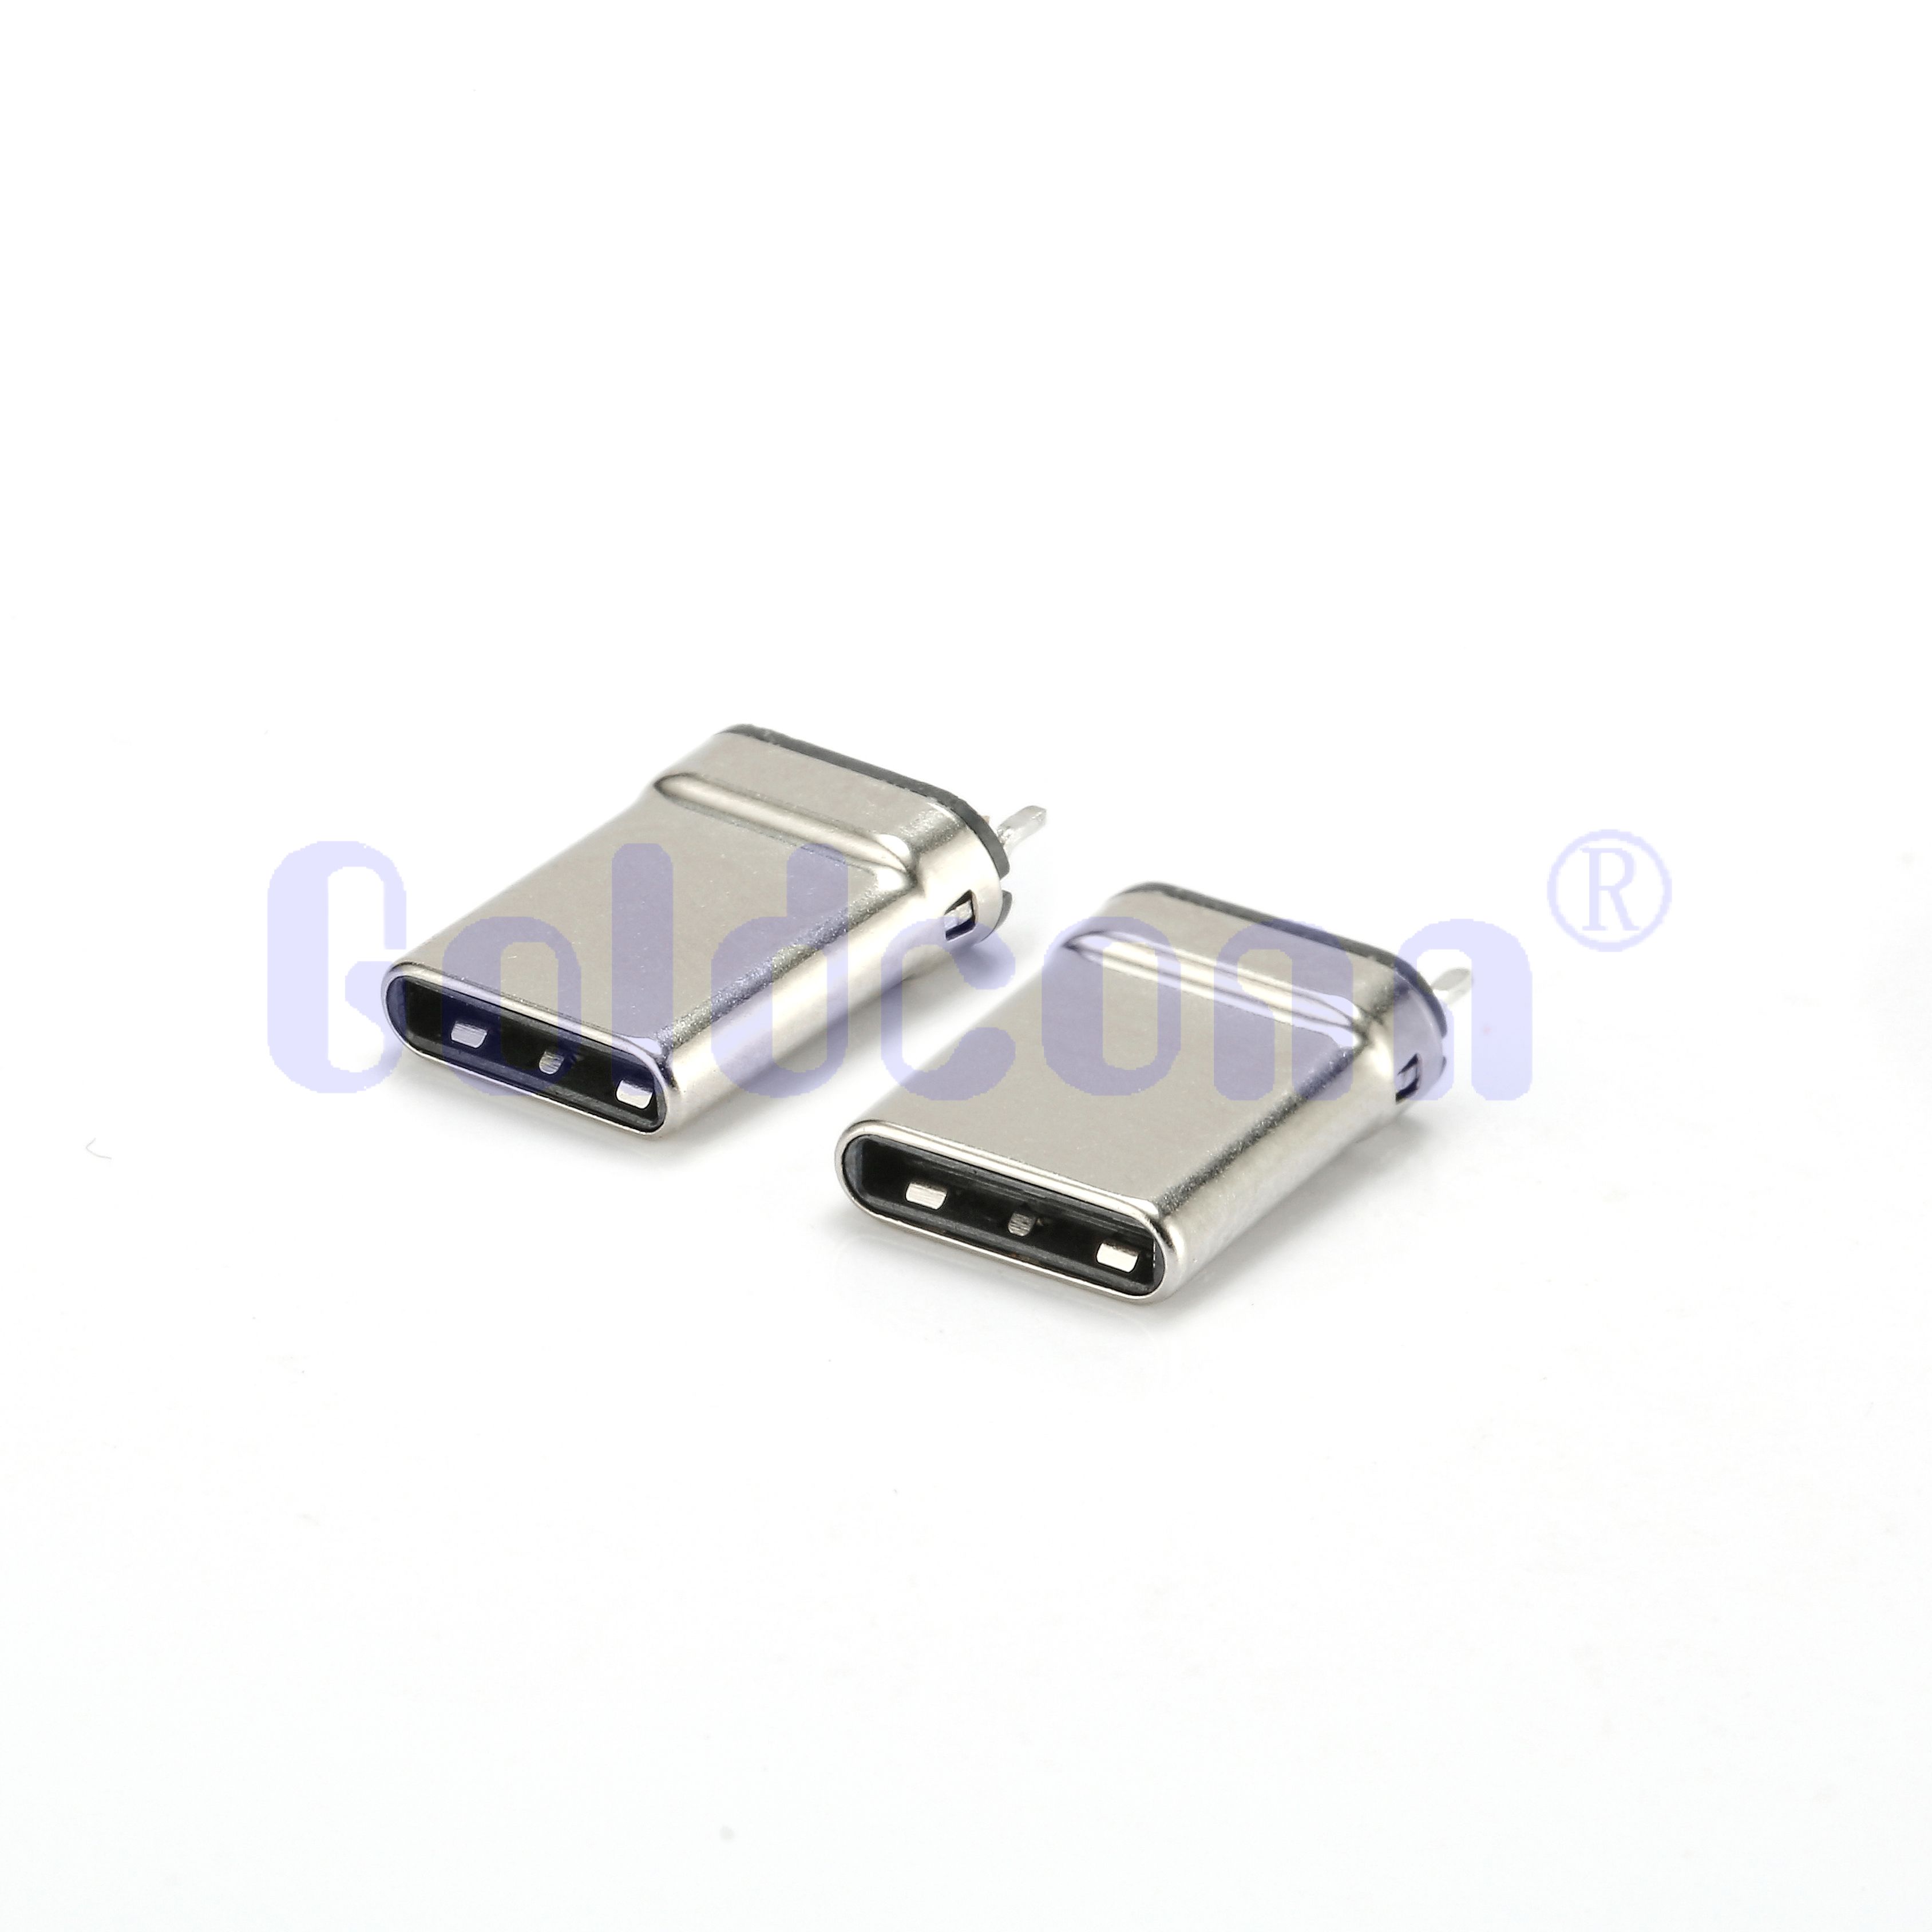 CM090-24LB01U-97 Type C TID USB 24 PIN Male Connector,Splint,Stretch